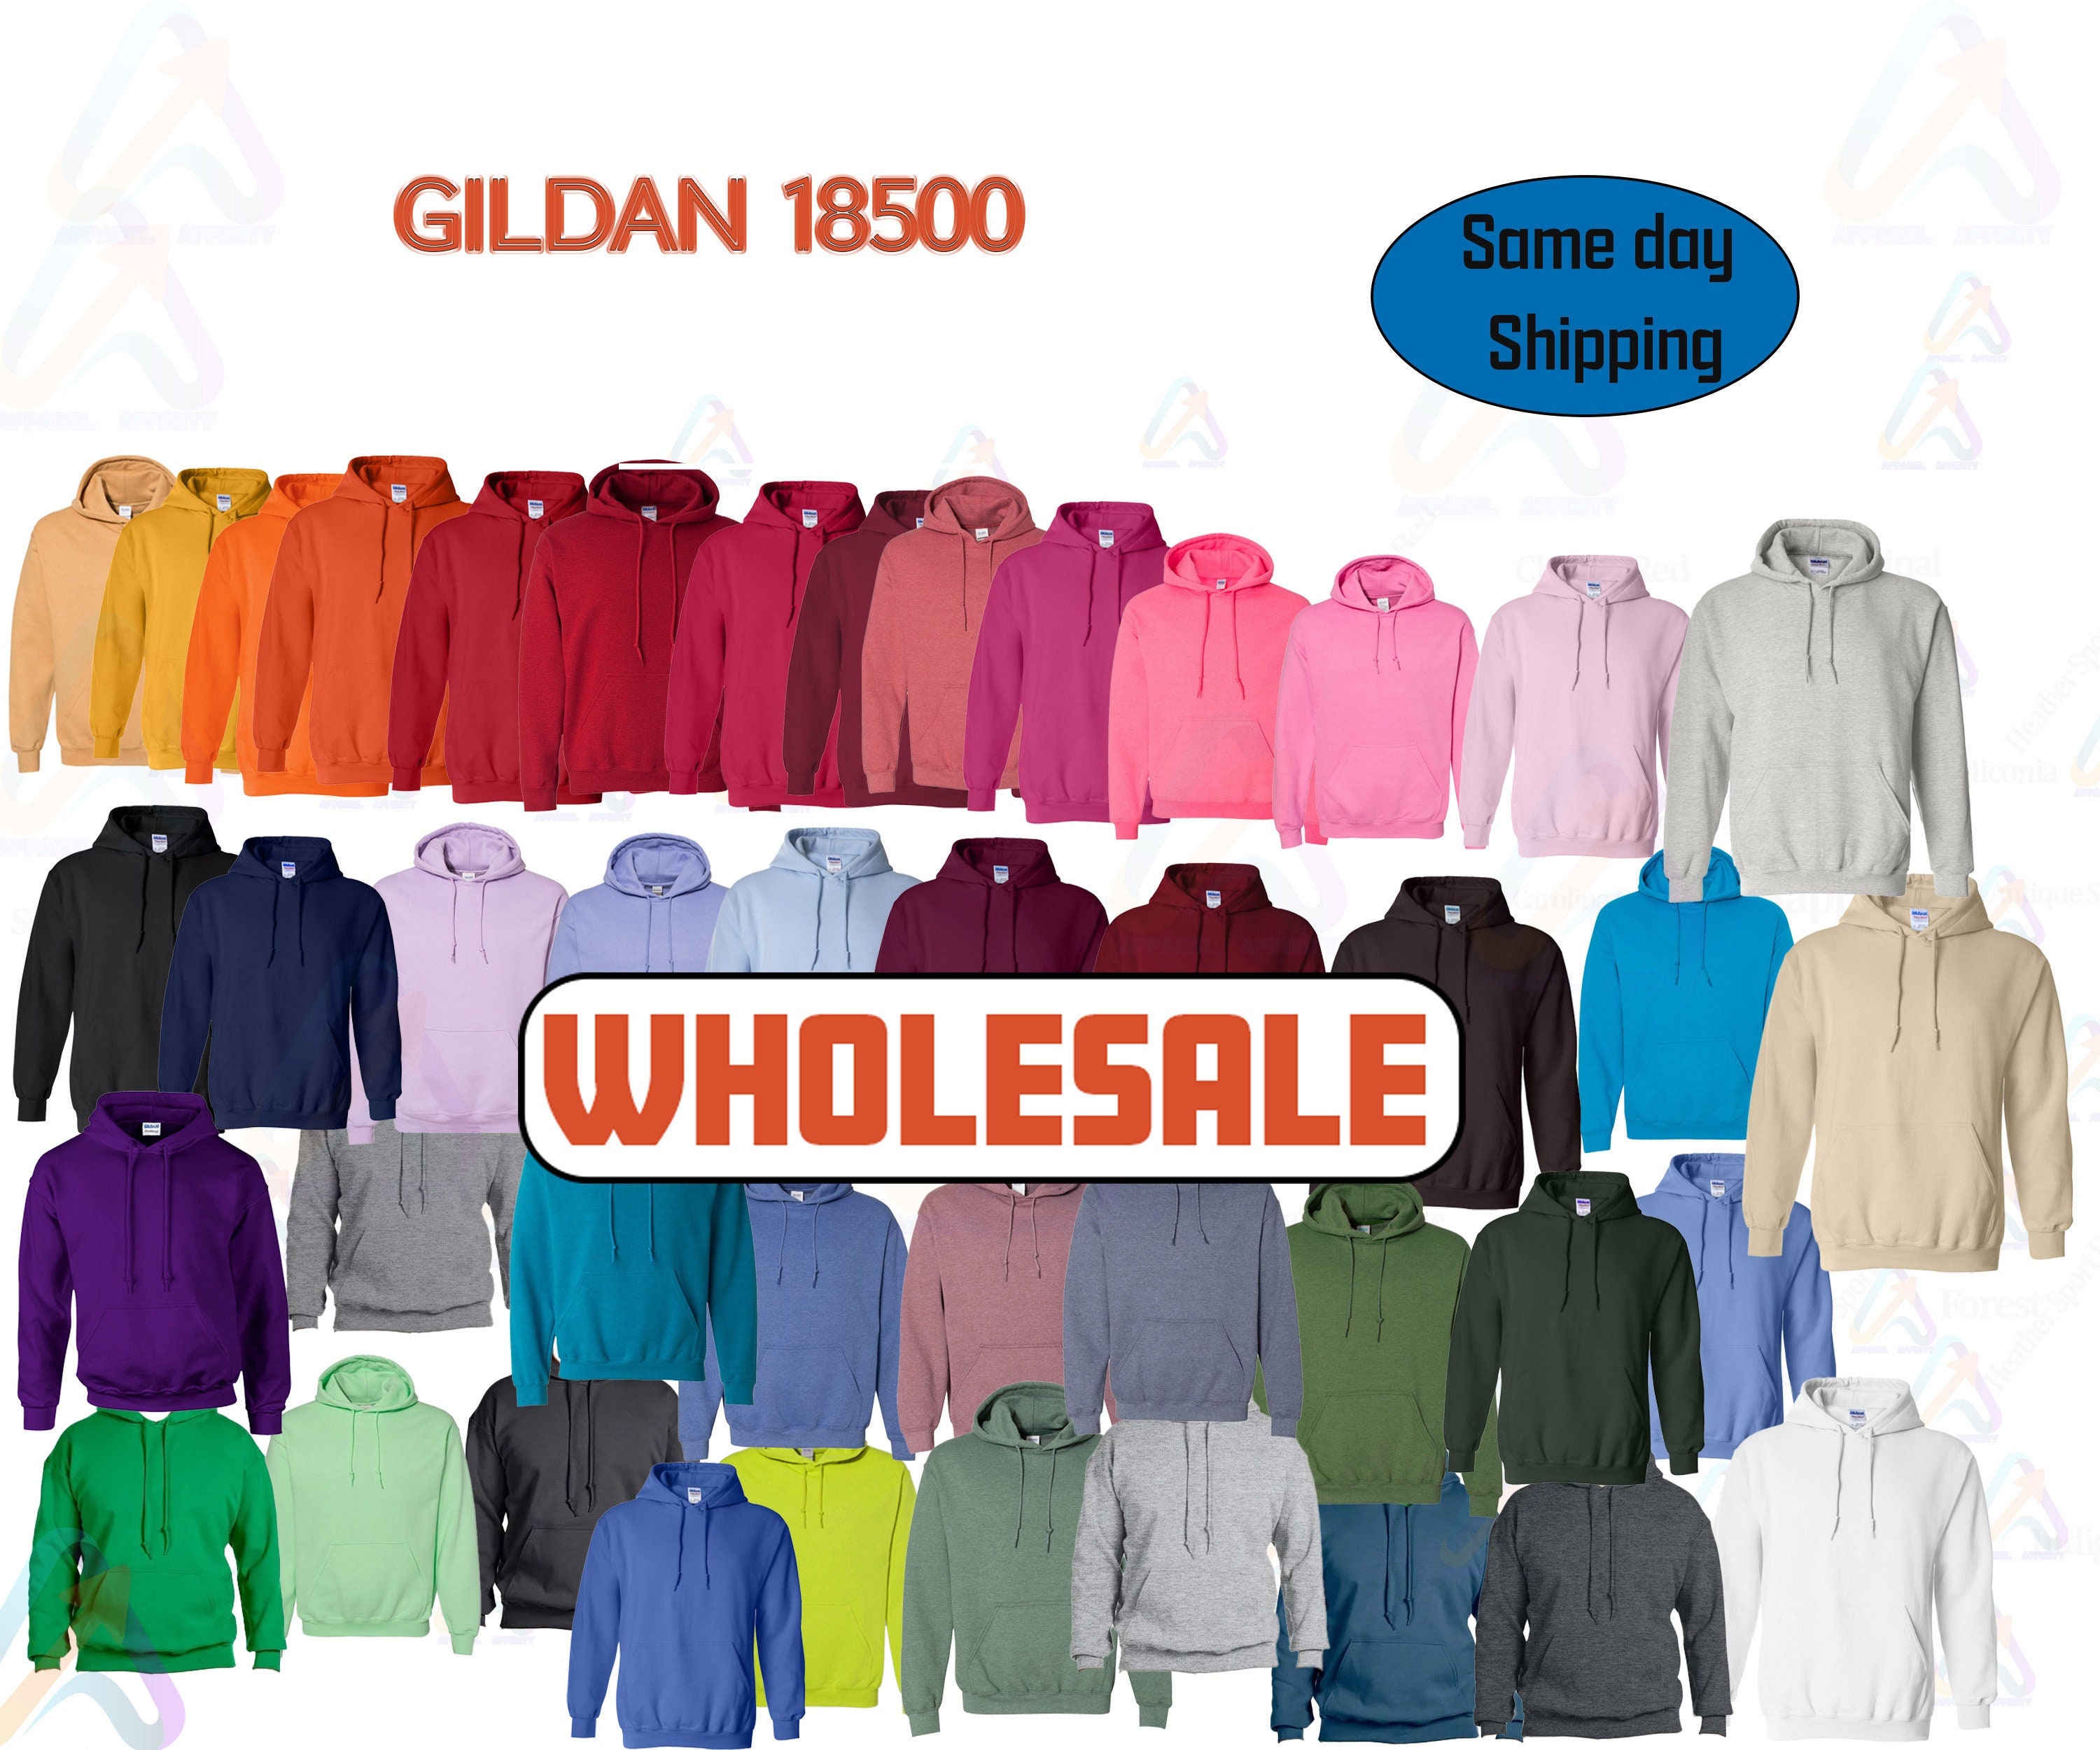 Adult Unisex Heavy Blend™ 8 Oz., 50/50 Hooded Sweater / Gildan